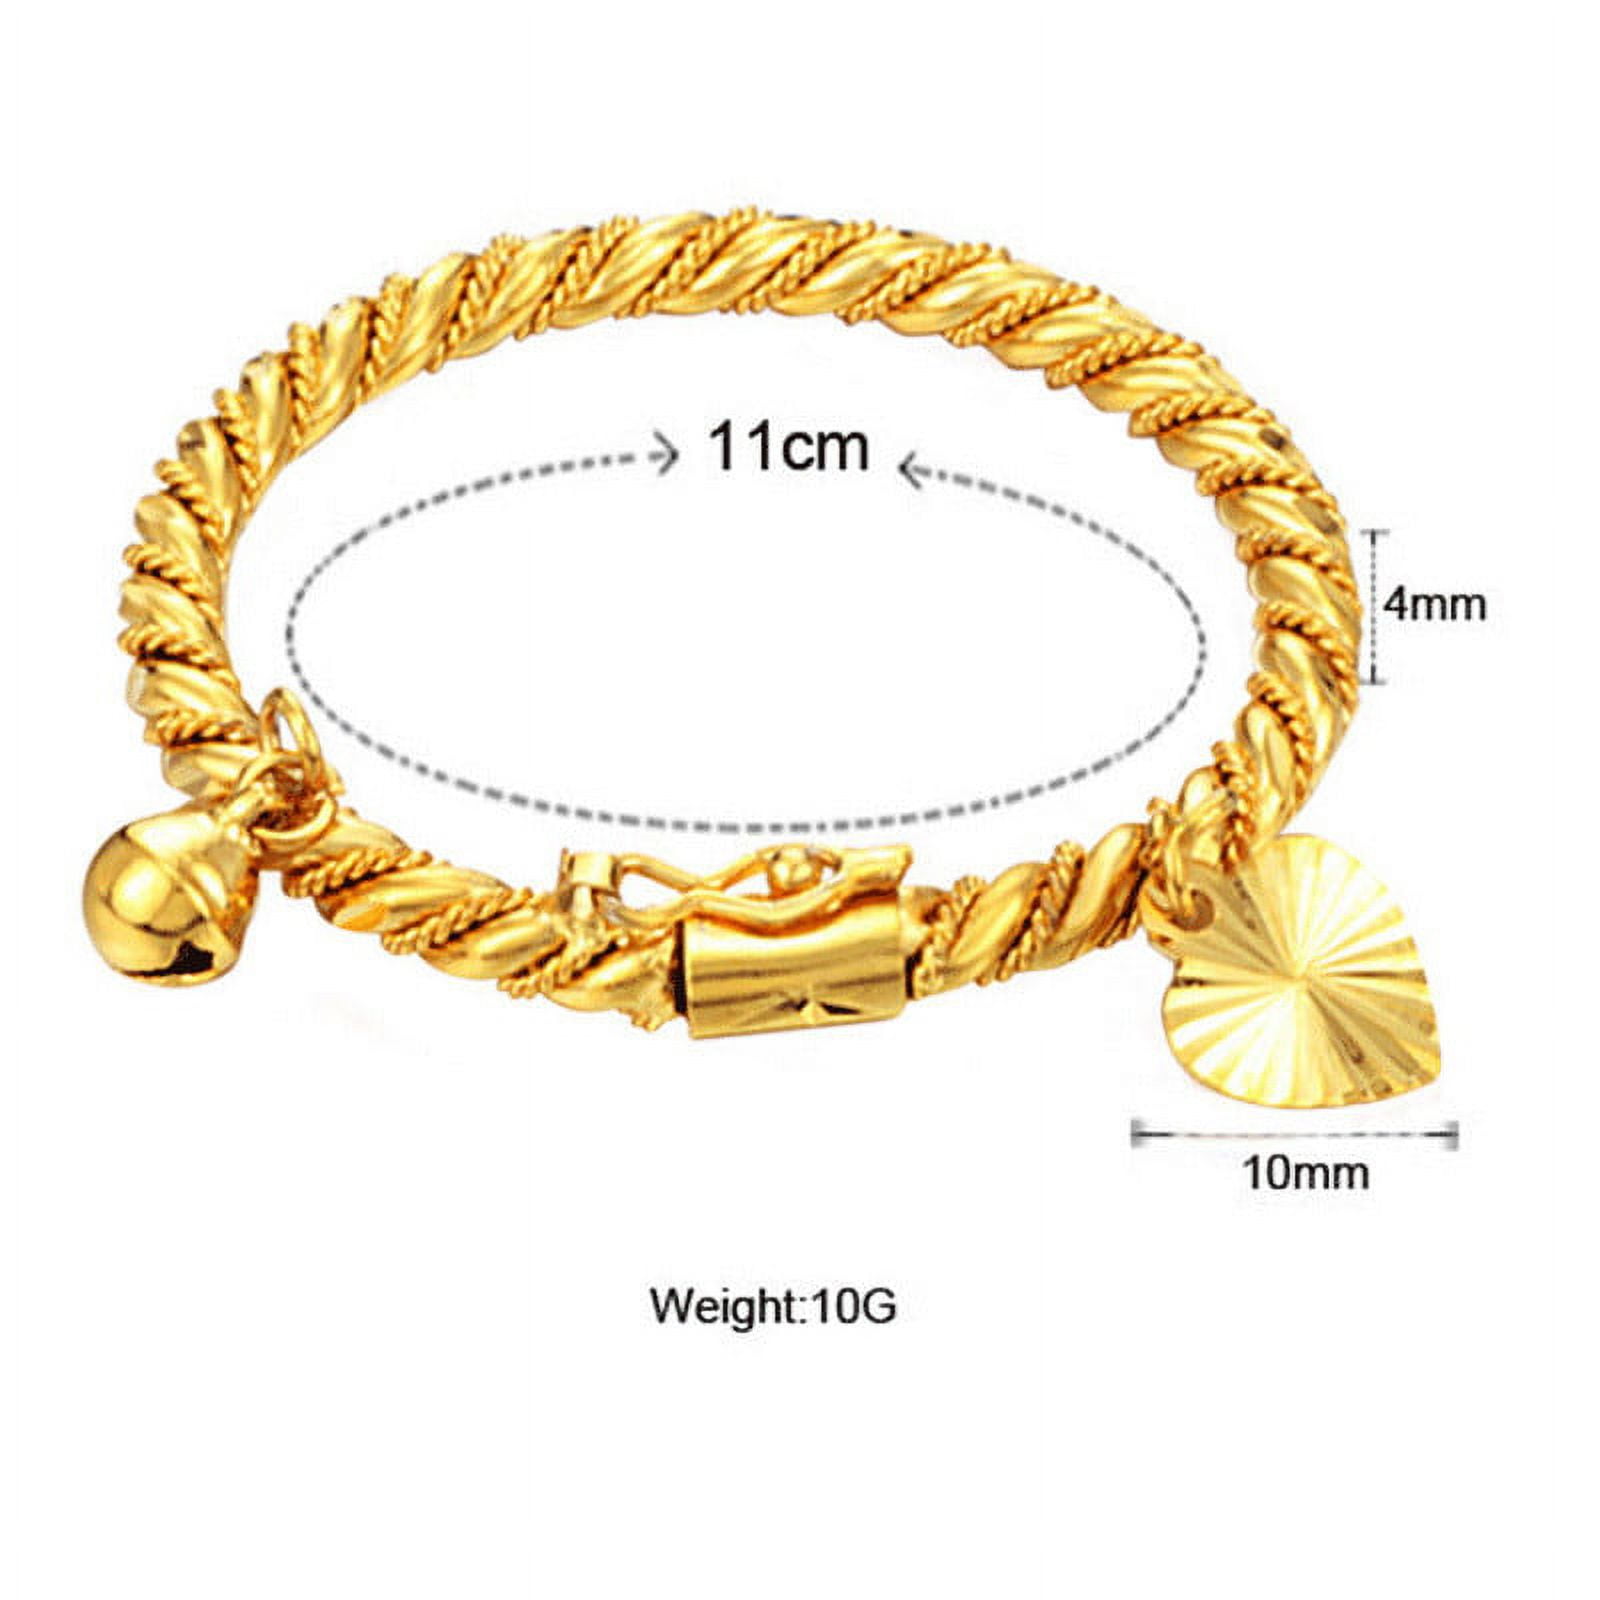 Little hand bracelet | Hand bracelet, Finger bracelets, Kids gold jewelry